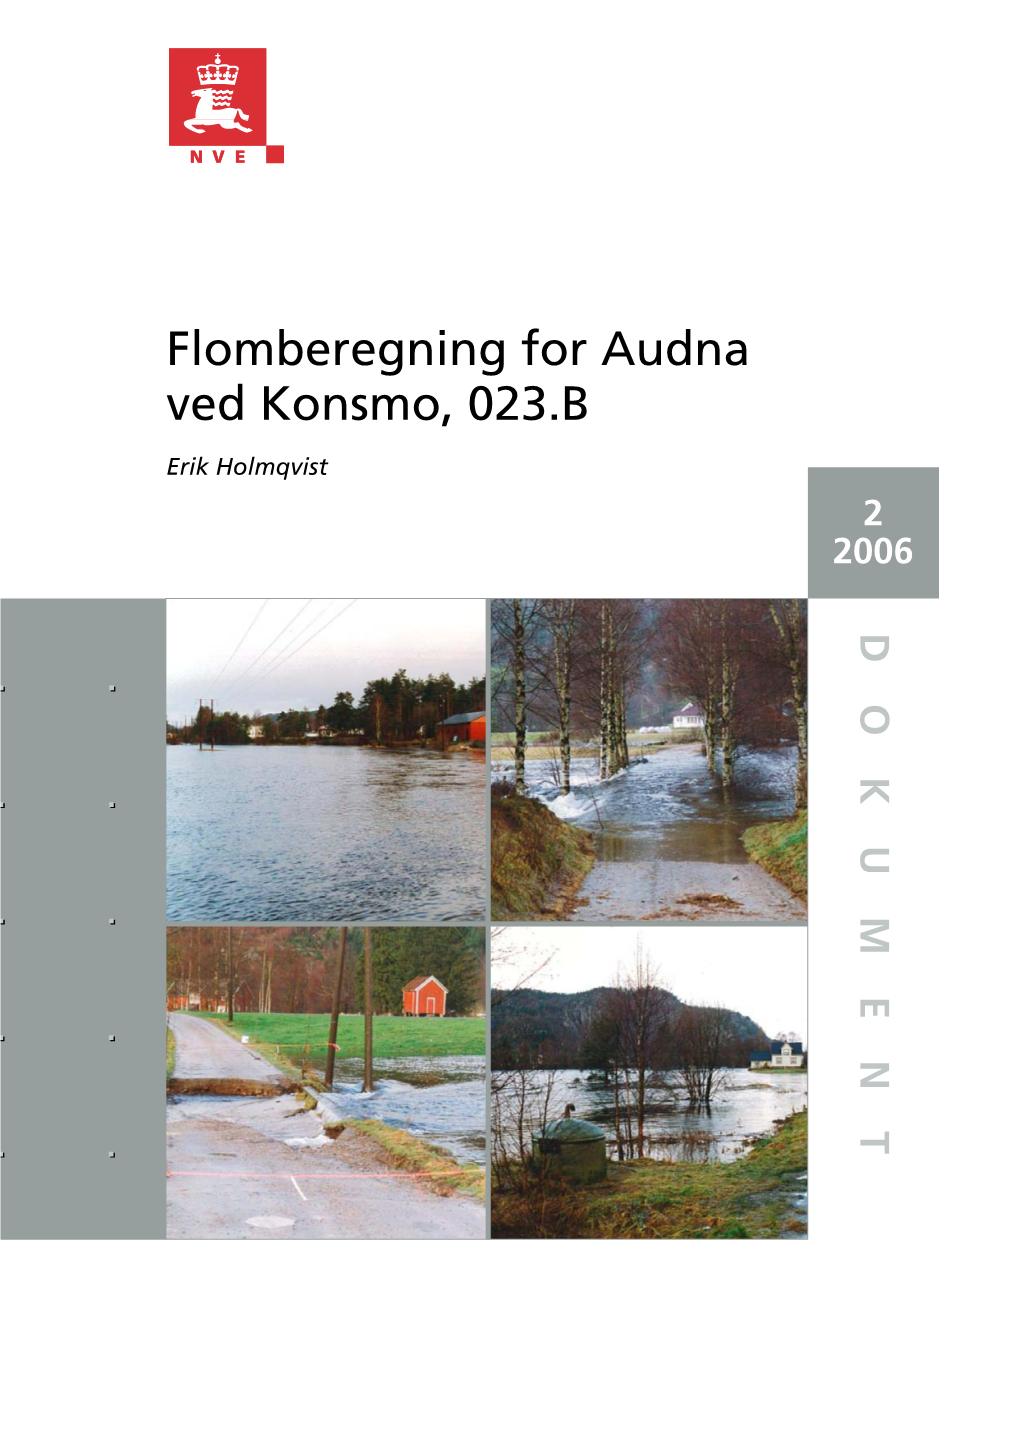 Flomberegning for Audna Ved Konsmo, 023.B